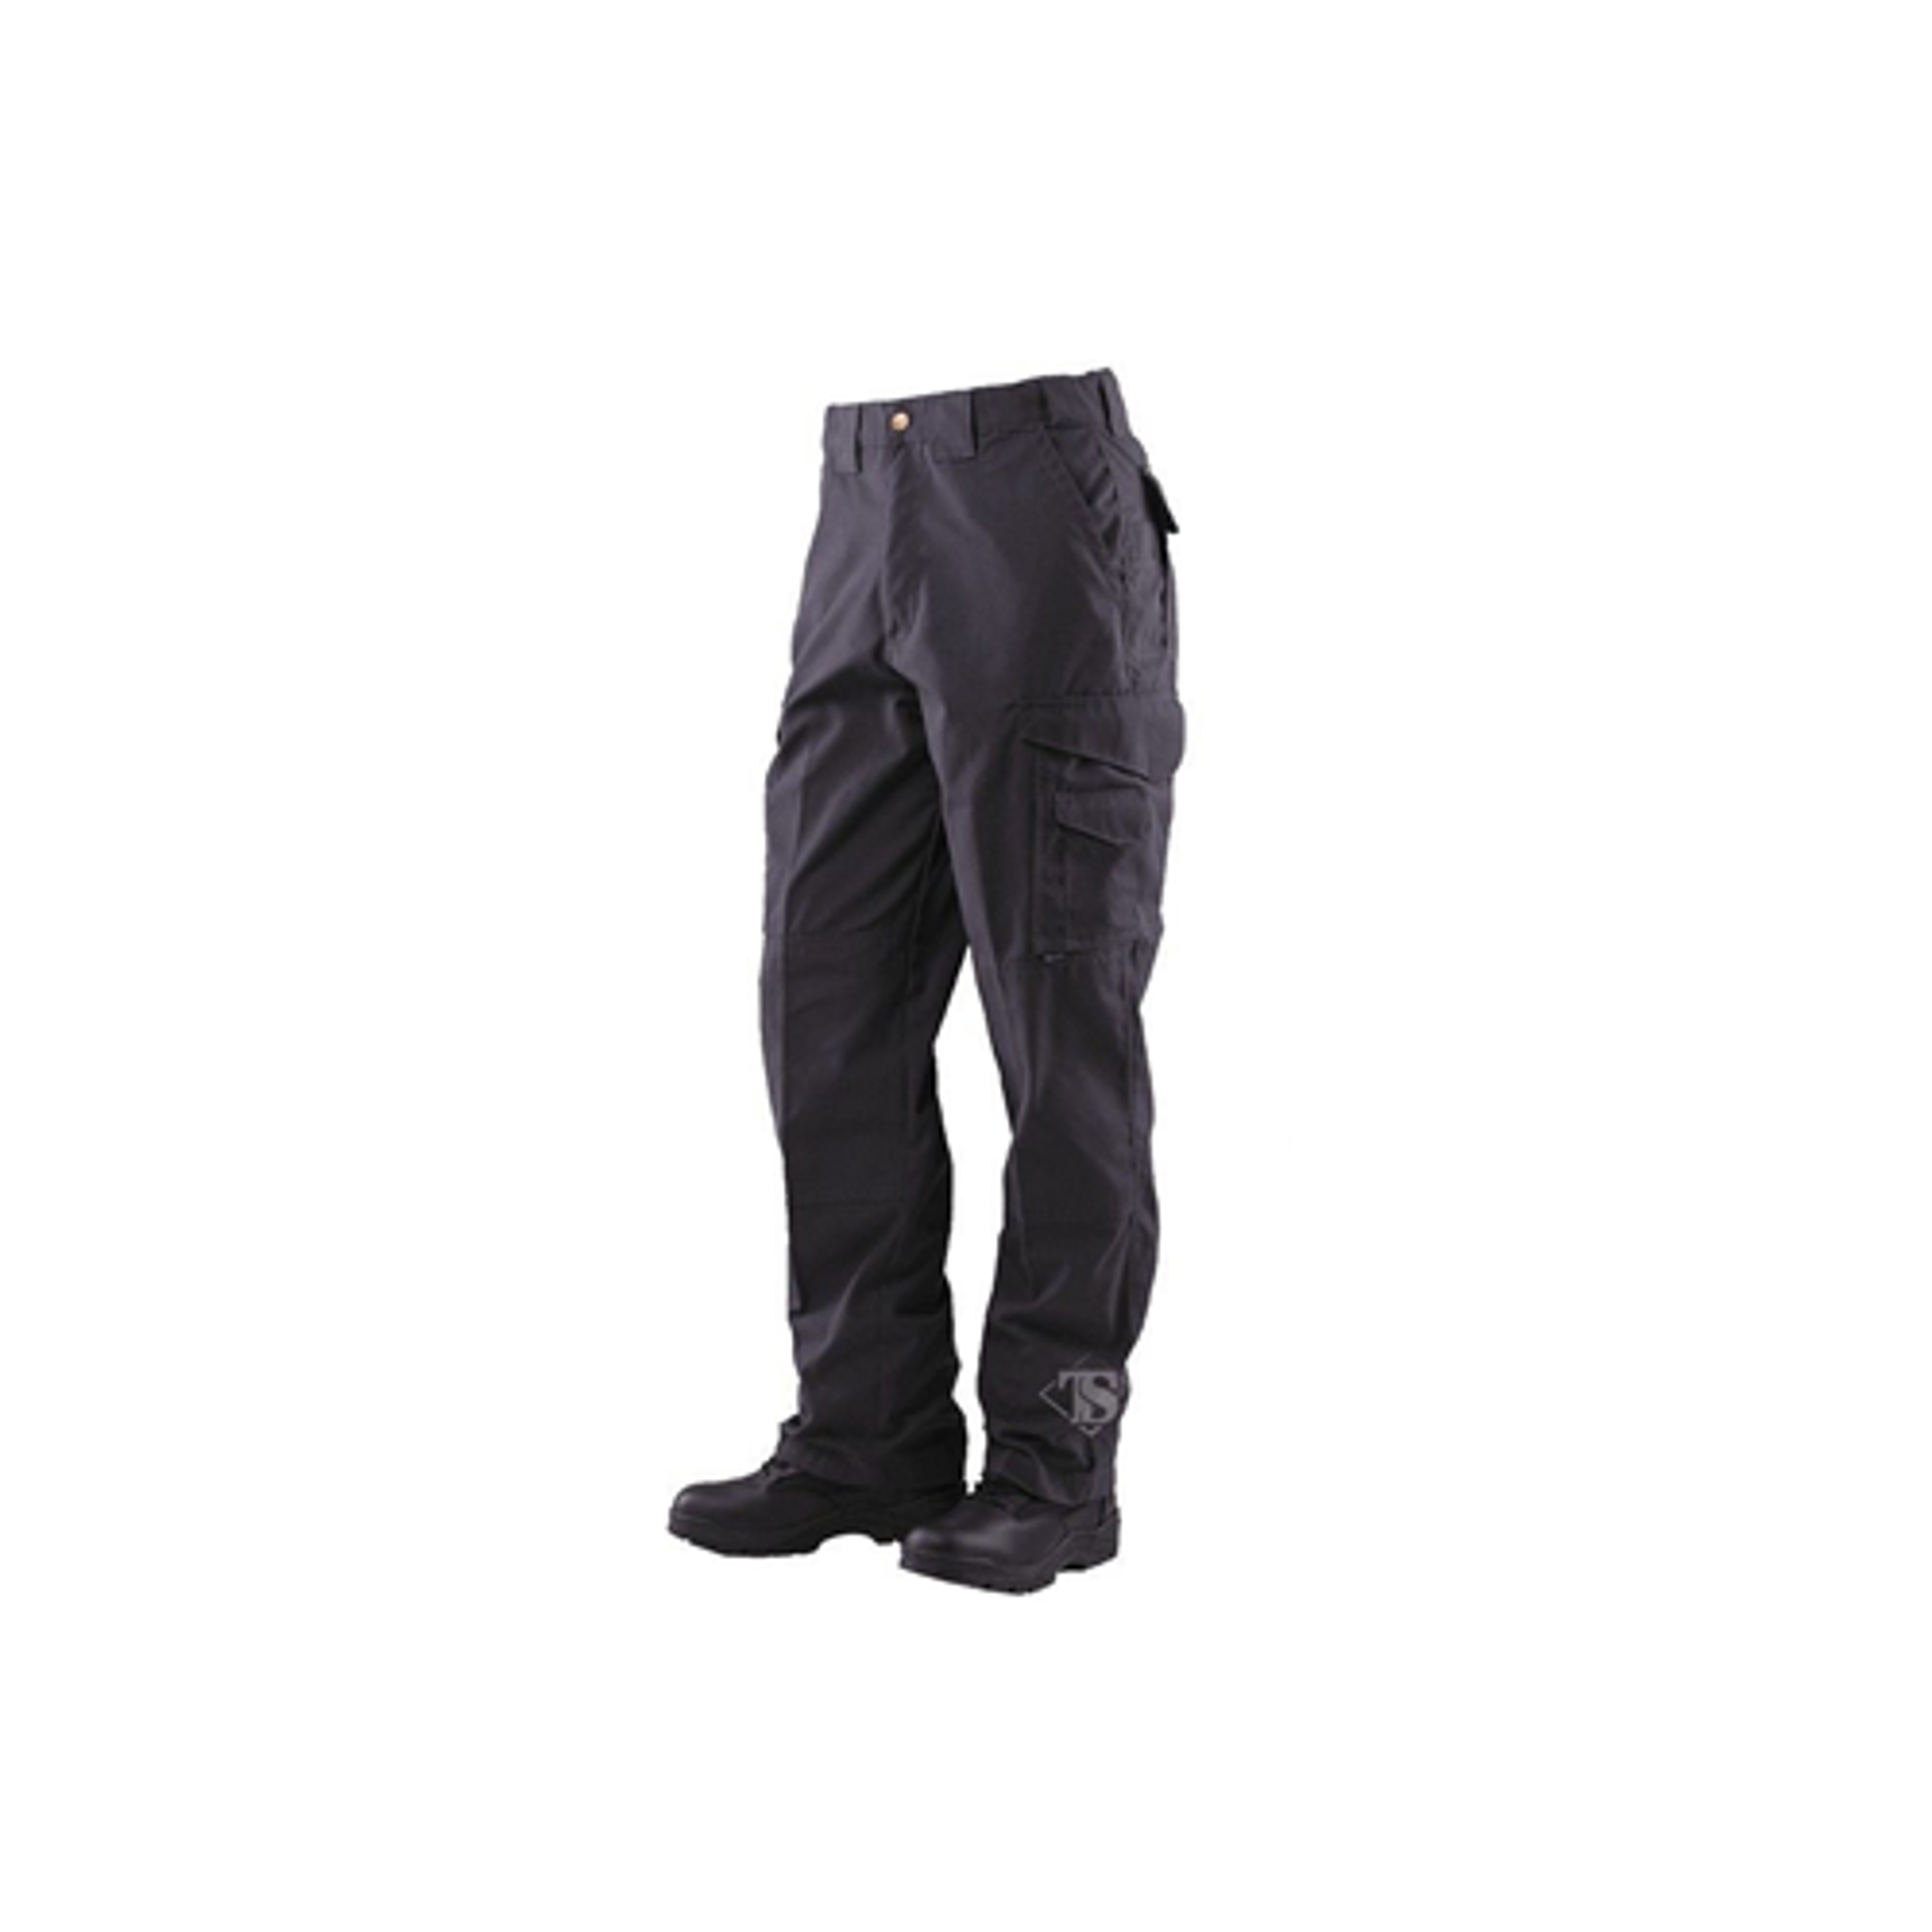 24-7 Original Tactical Pants - 6.5oz - Black - KRTSP-1062046